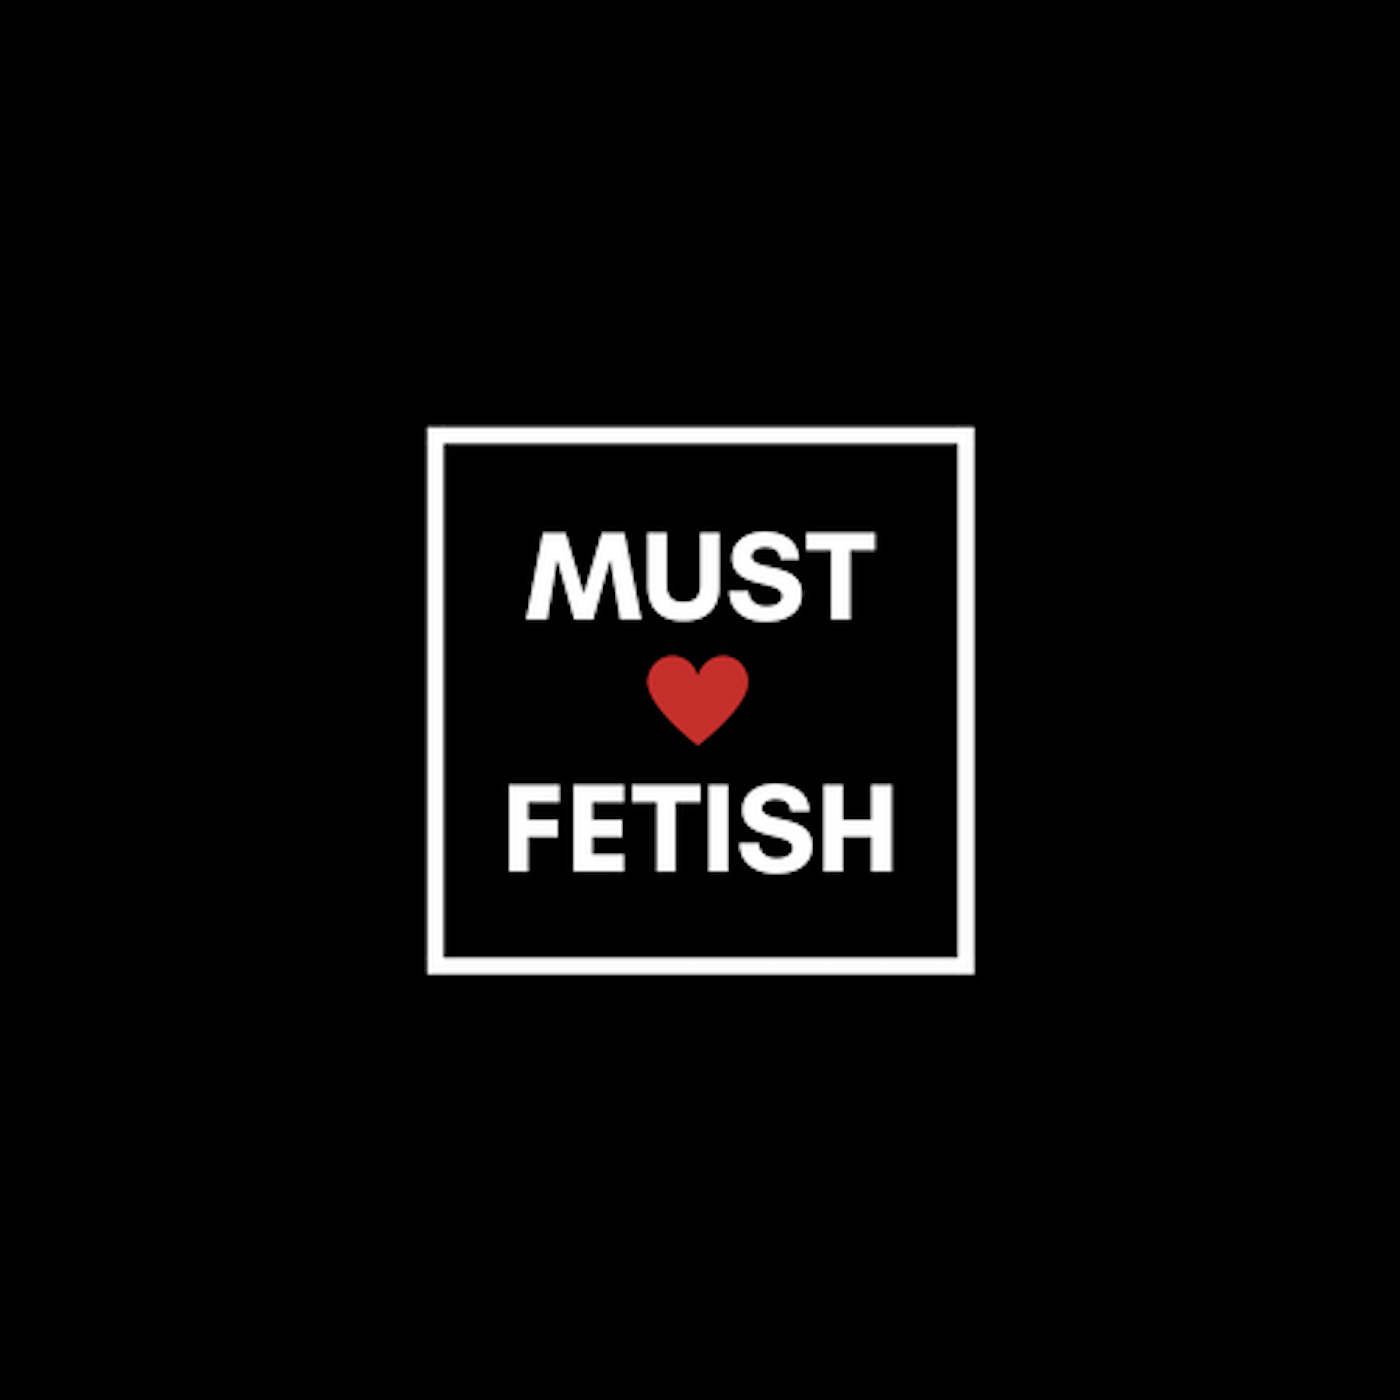 Love fetish